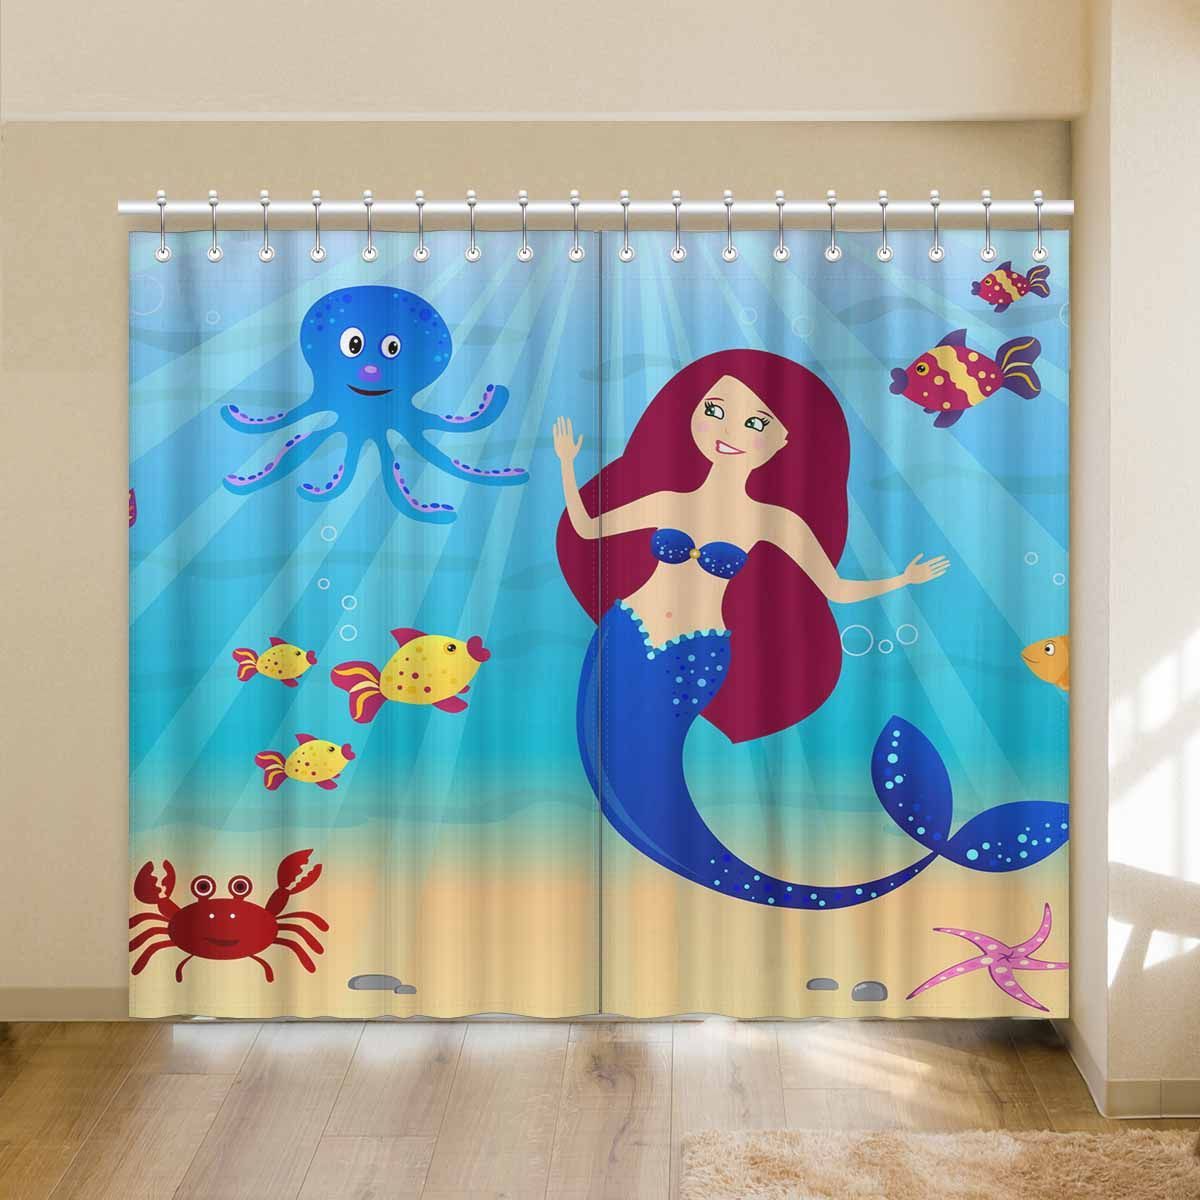 Undersea Mermaid Octopus Fishes And Crap Printed Window Curtain